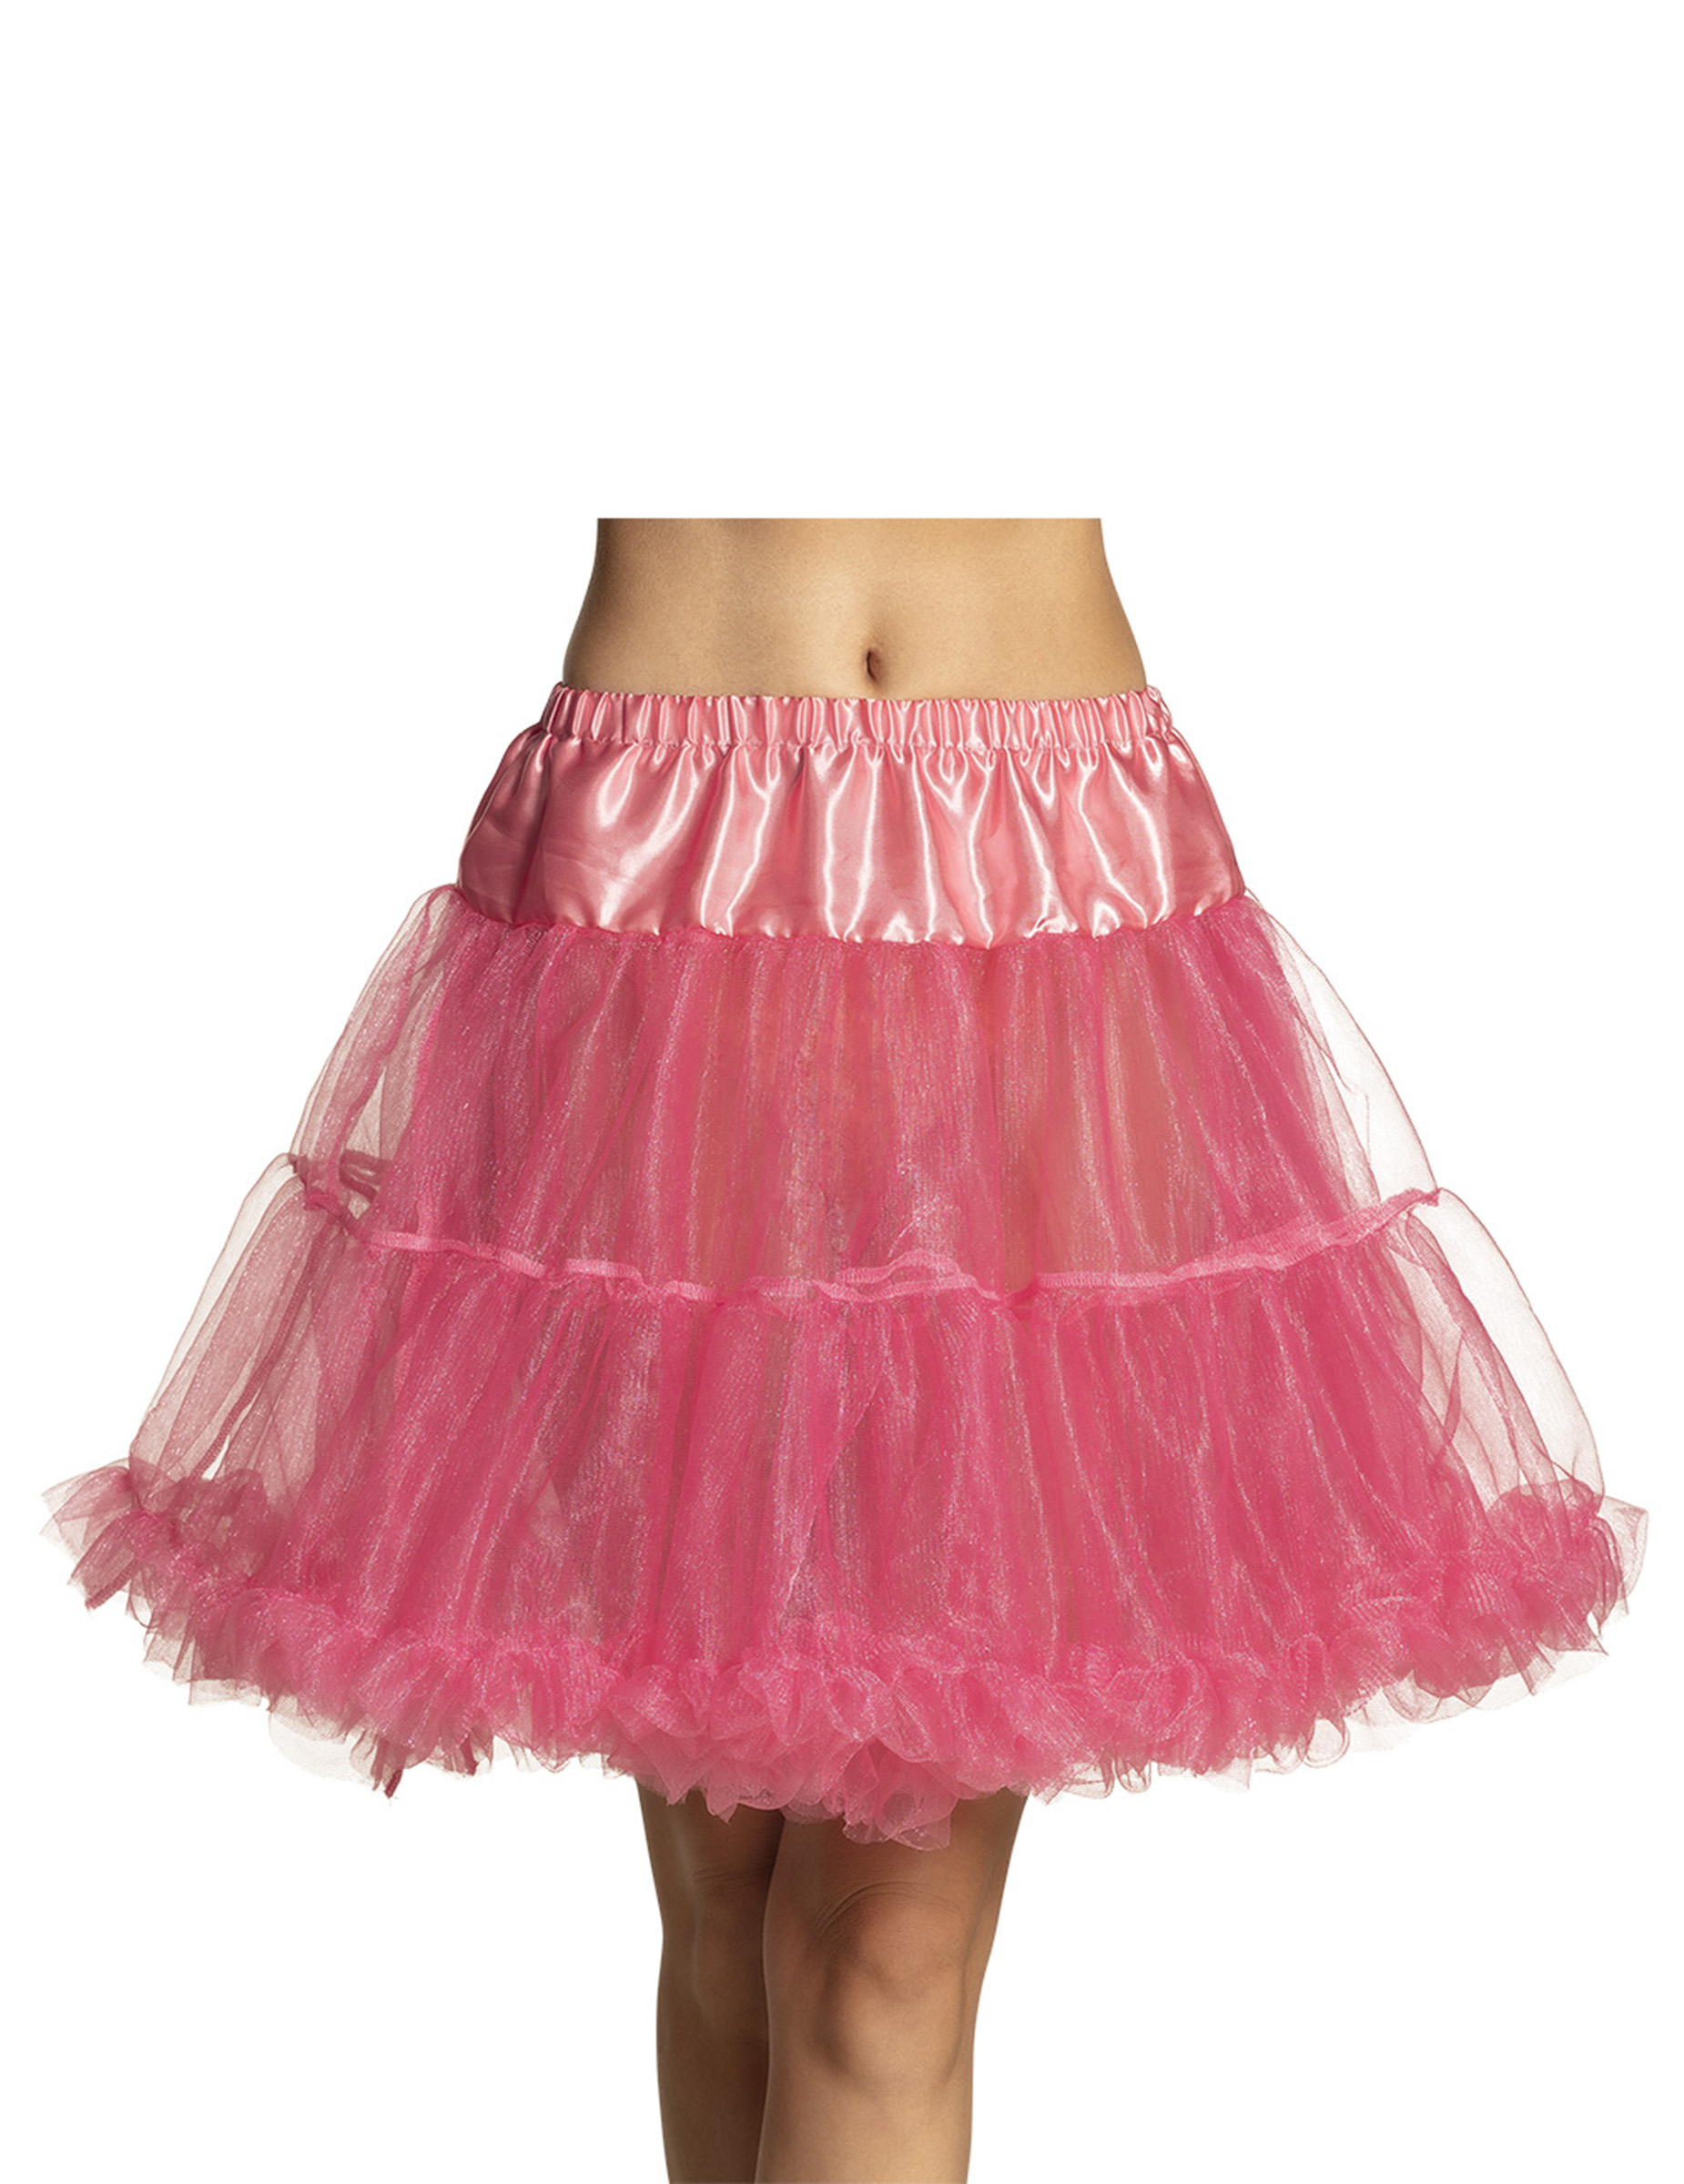 Petticoat für Damen Unterrock Accessoire rosa von BOLAND BV